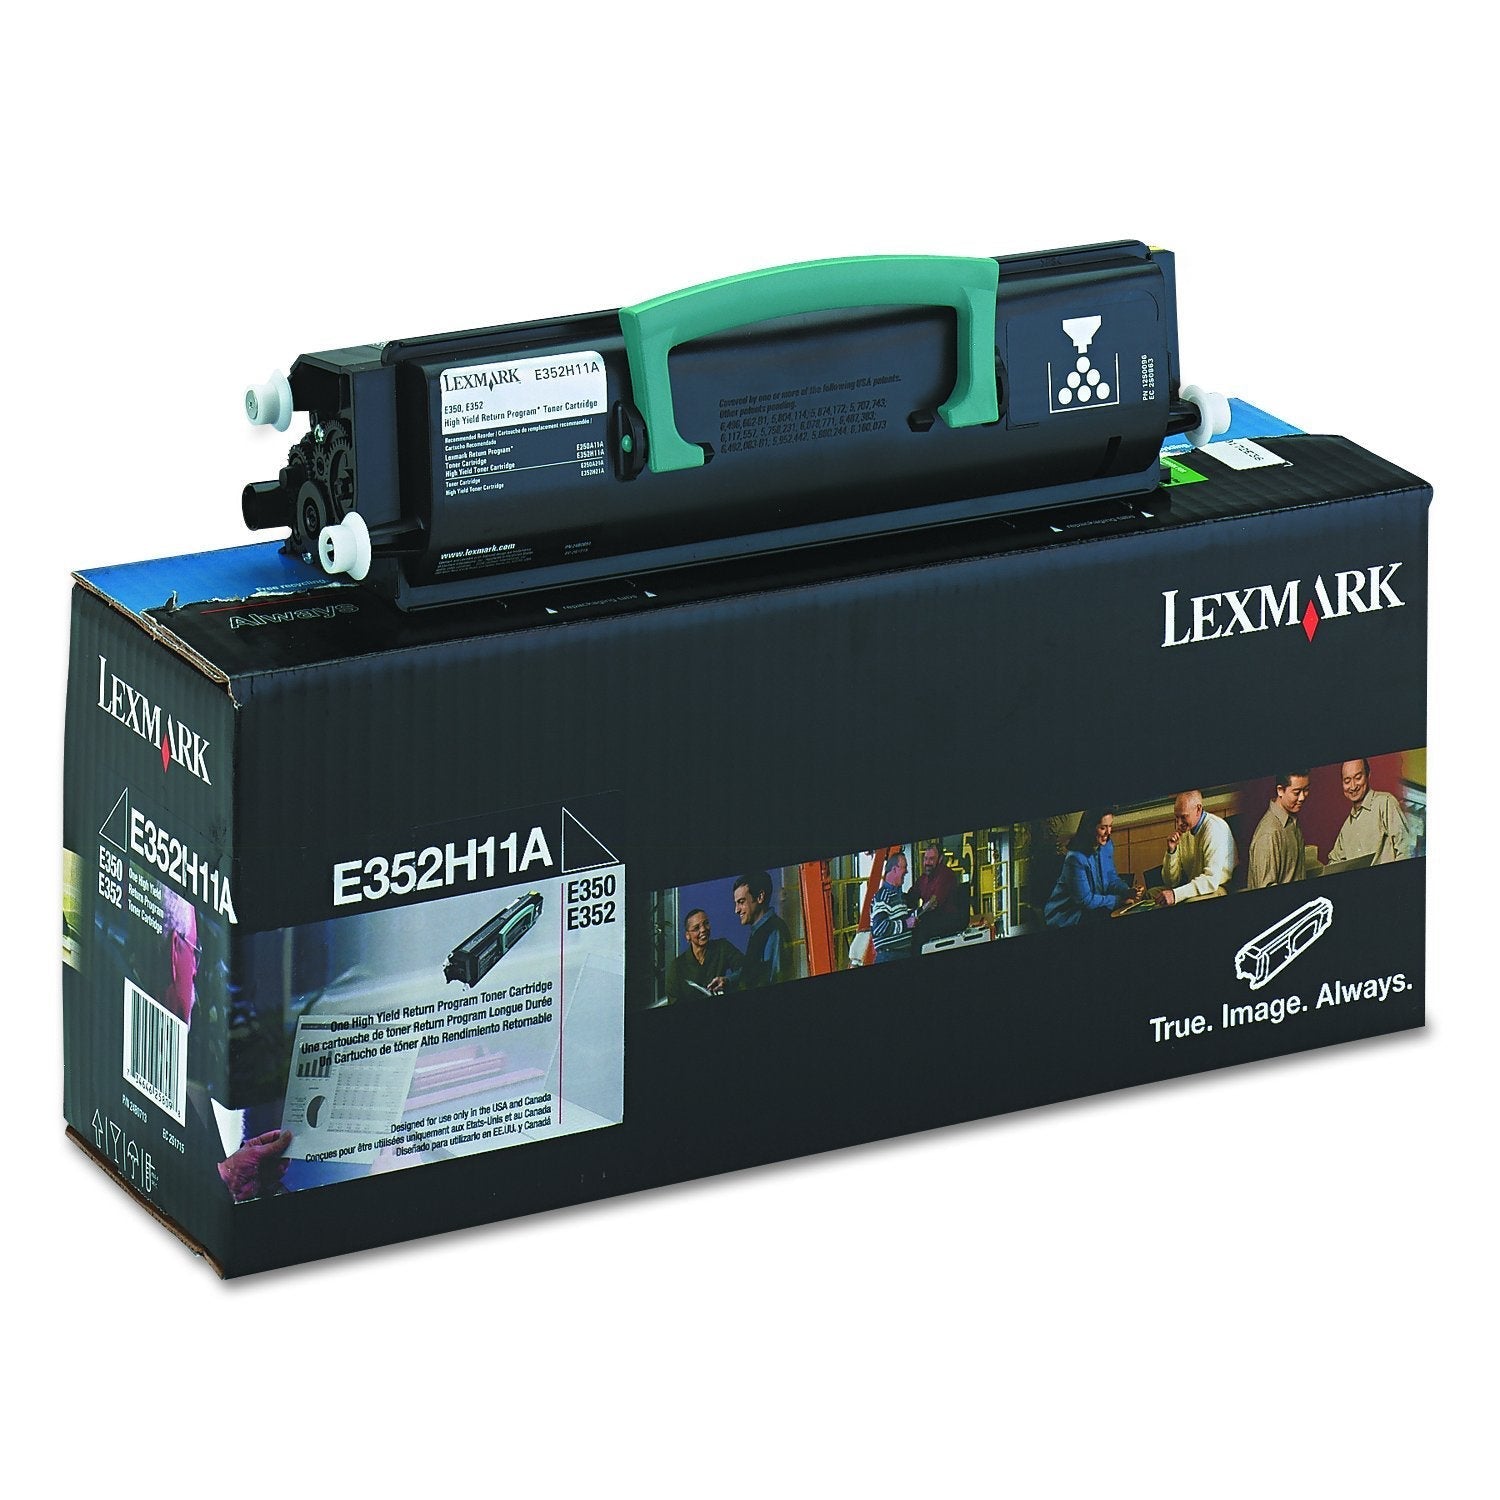 Absolute Toner Lexmark E352H11A Original Genuine OEM High Yield Black Toner Cartridge Original Lexmark Cartridges